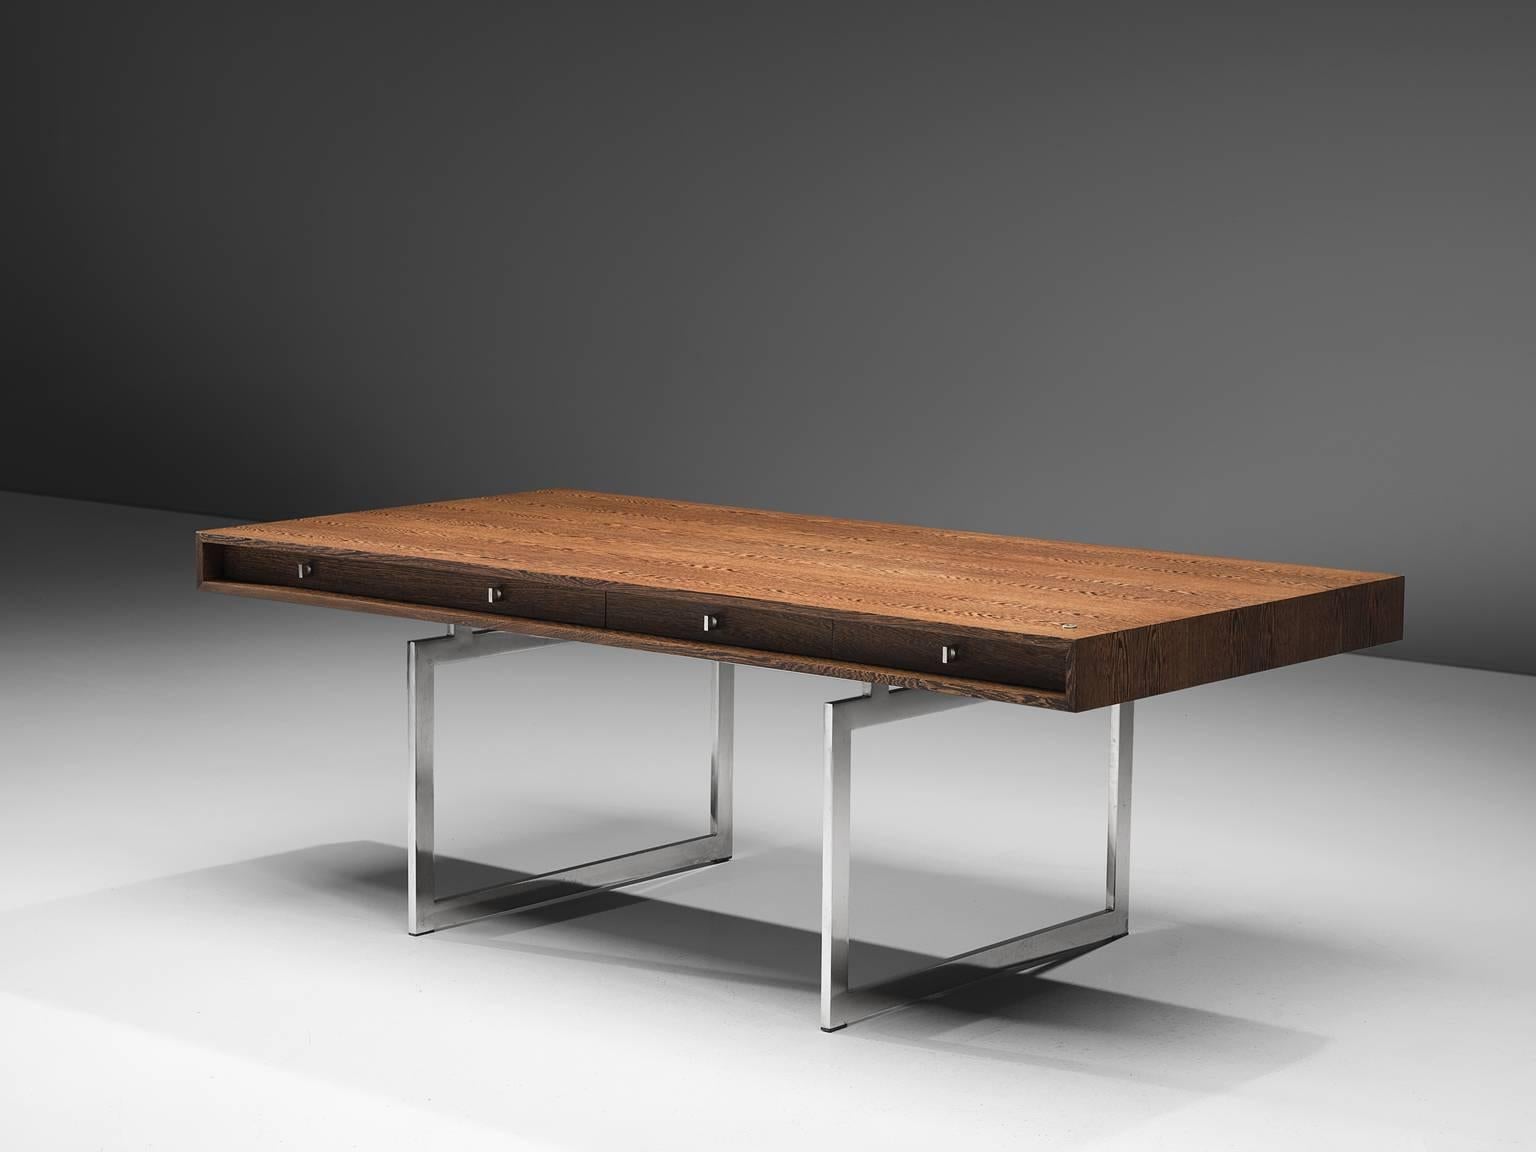 Bodil Kjaer for E. Pedersen & Søn, table model 901, wenge and chrome steel, Denmark, 1959.

This free-standing desk in wenge is designed by the Danish designer Bodil Kjaer. The desk can be used with multiple purposes, as a writing table, desk or